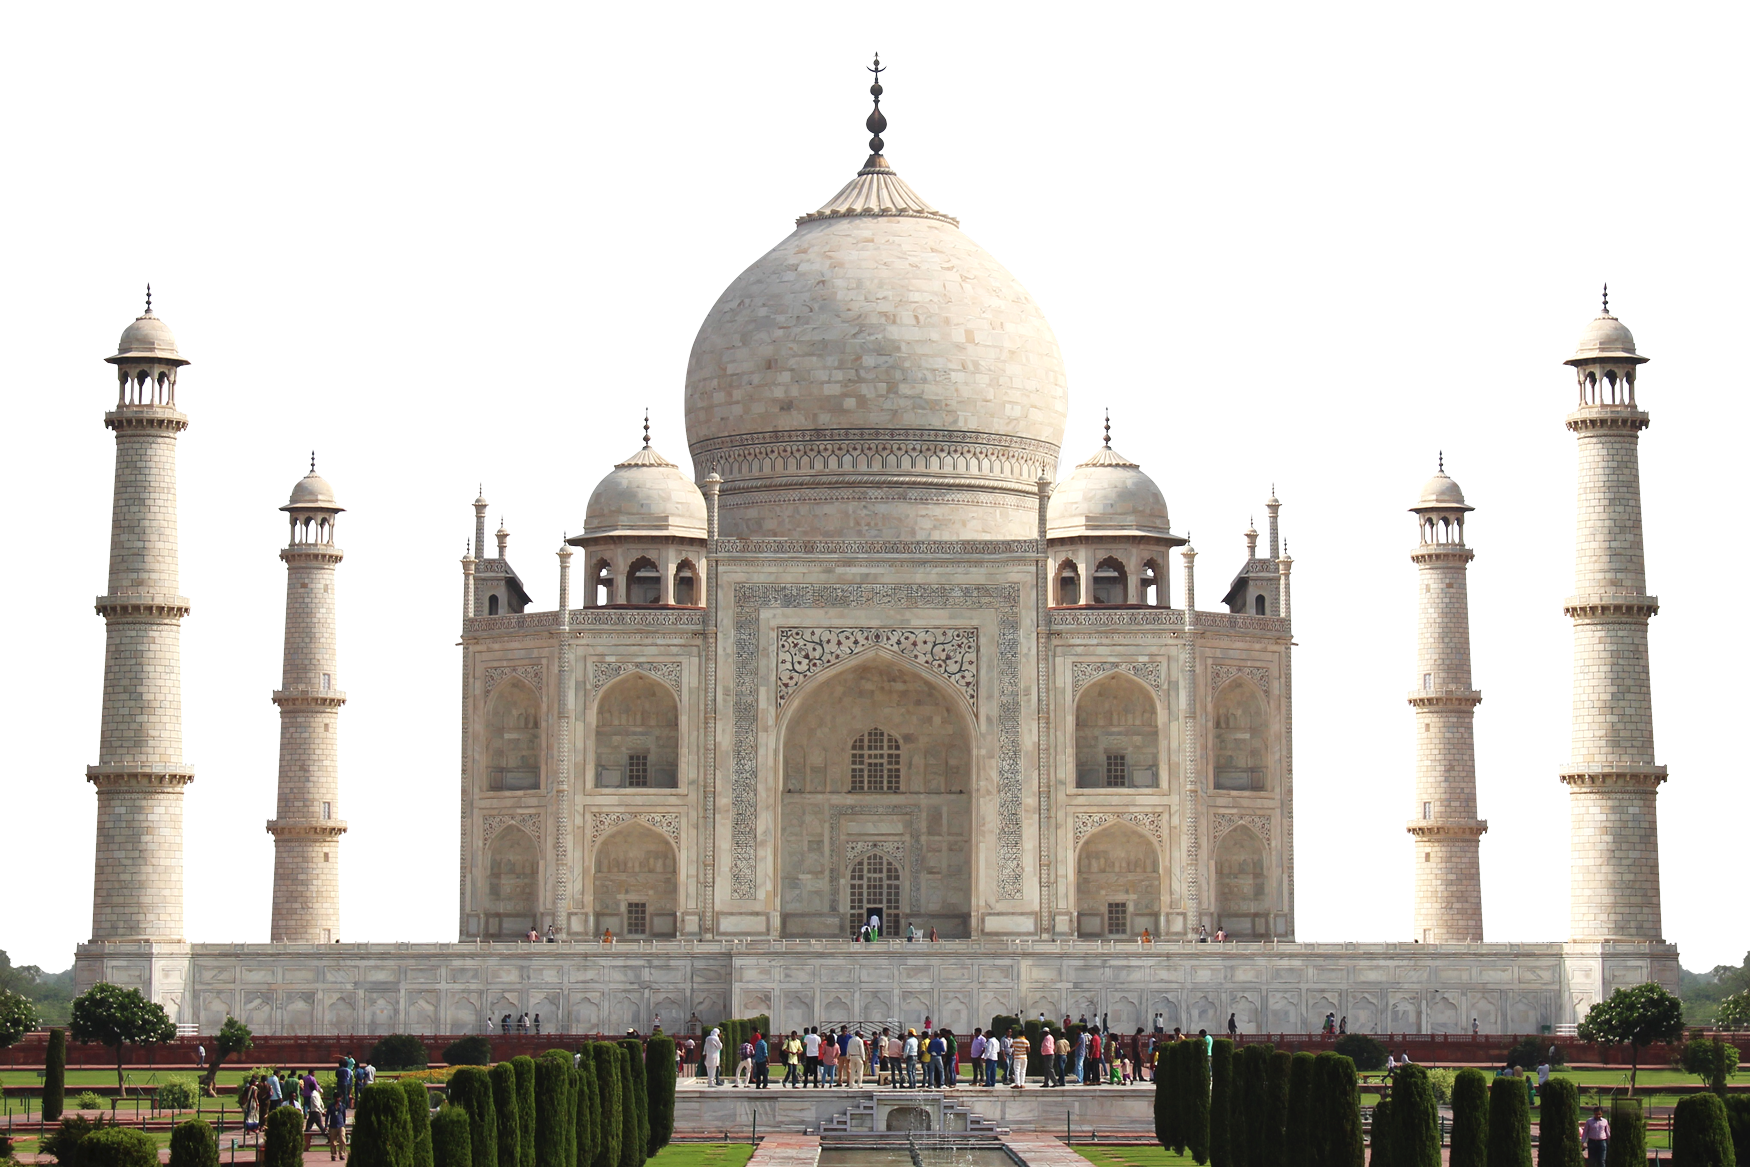 Taj Mahal Transparent PNG